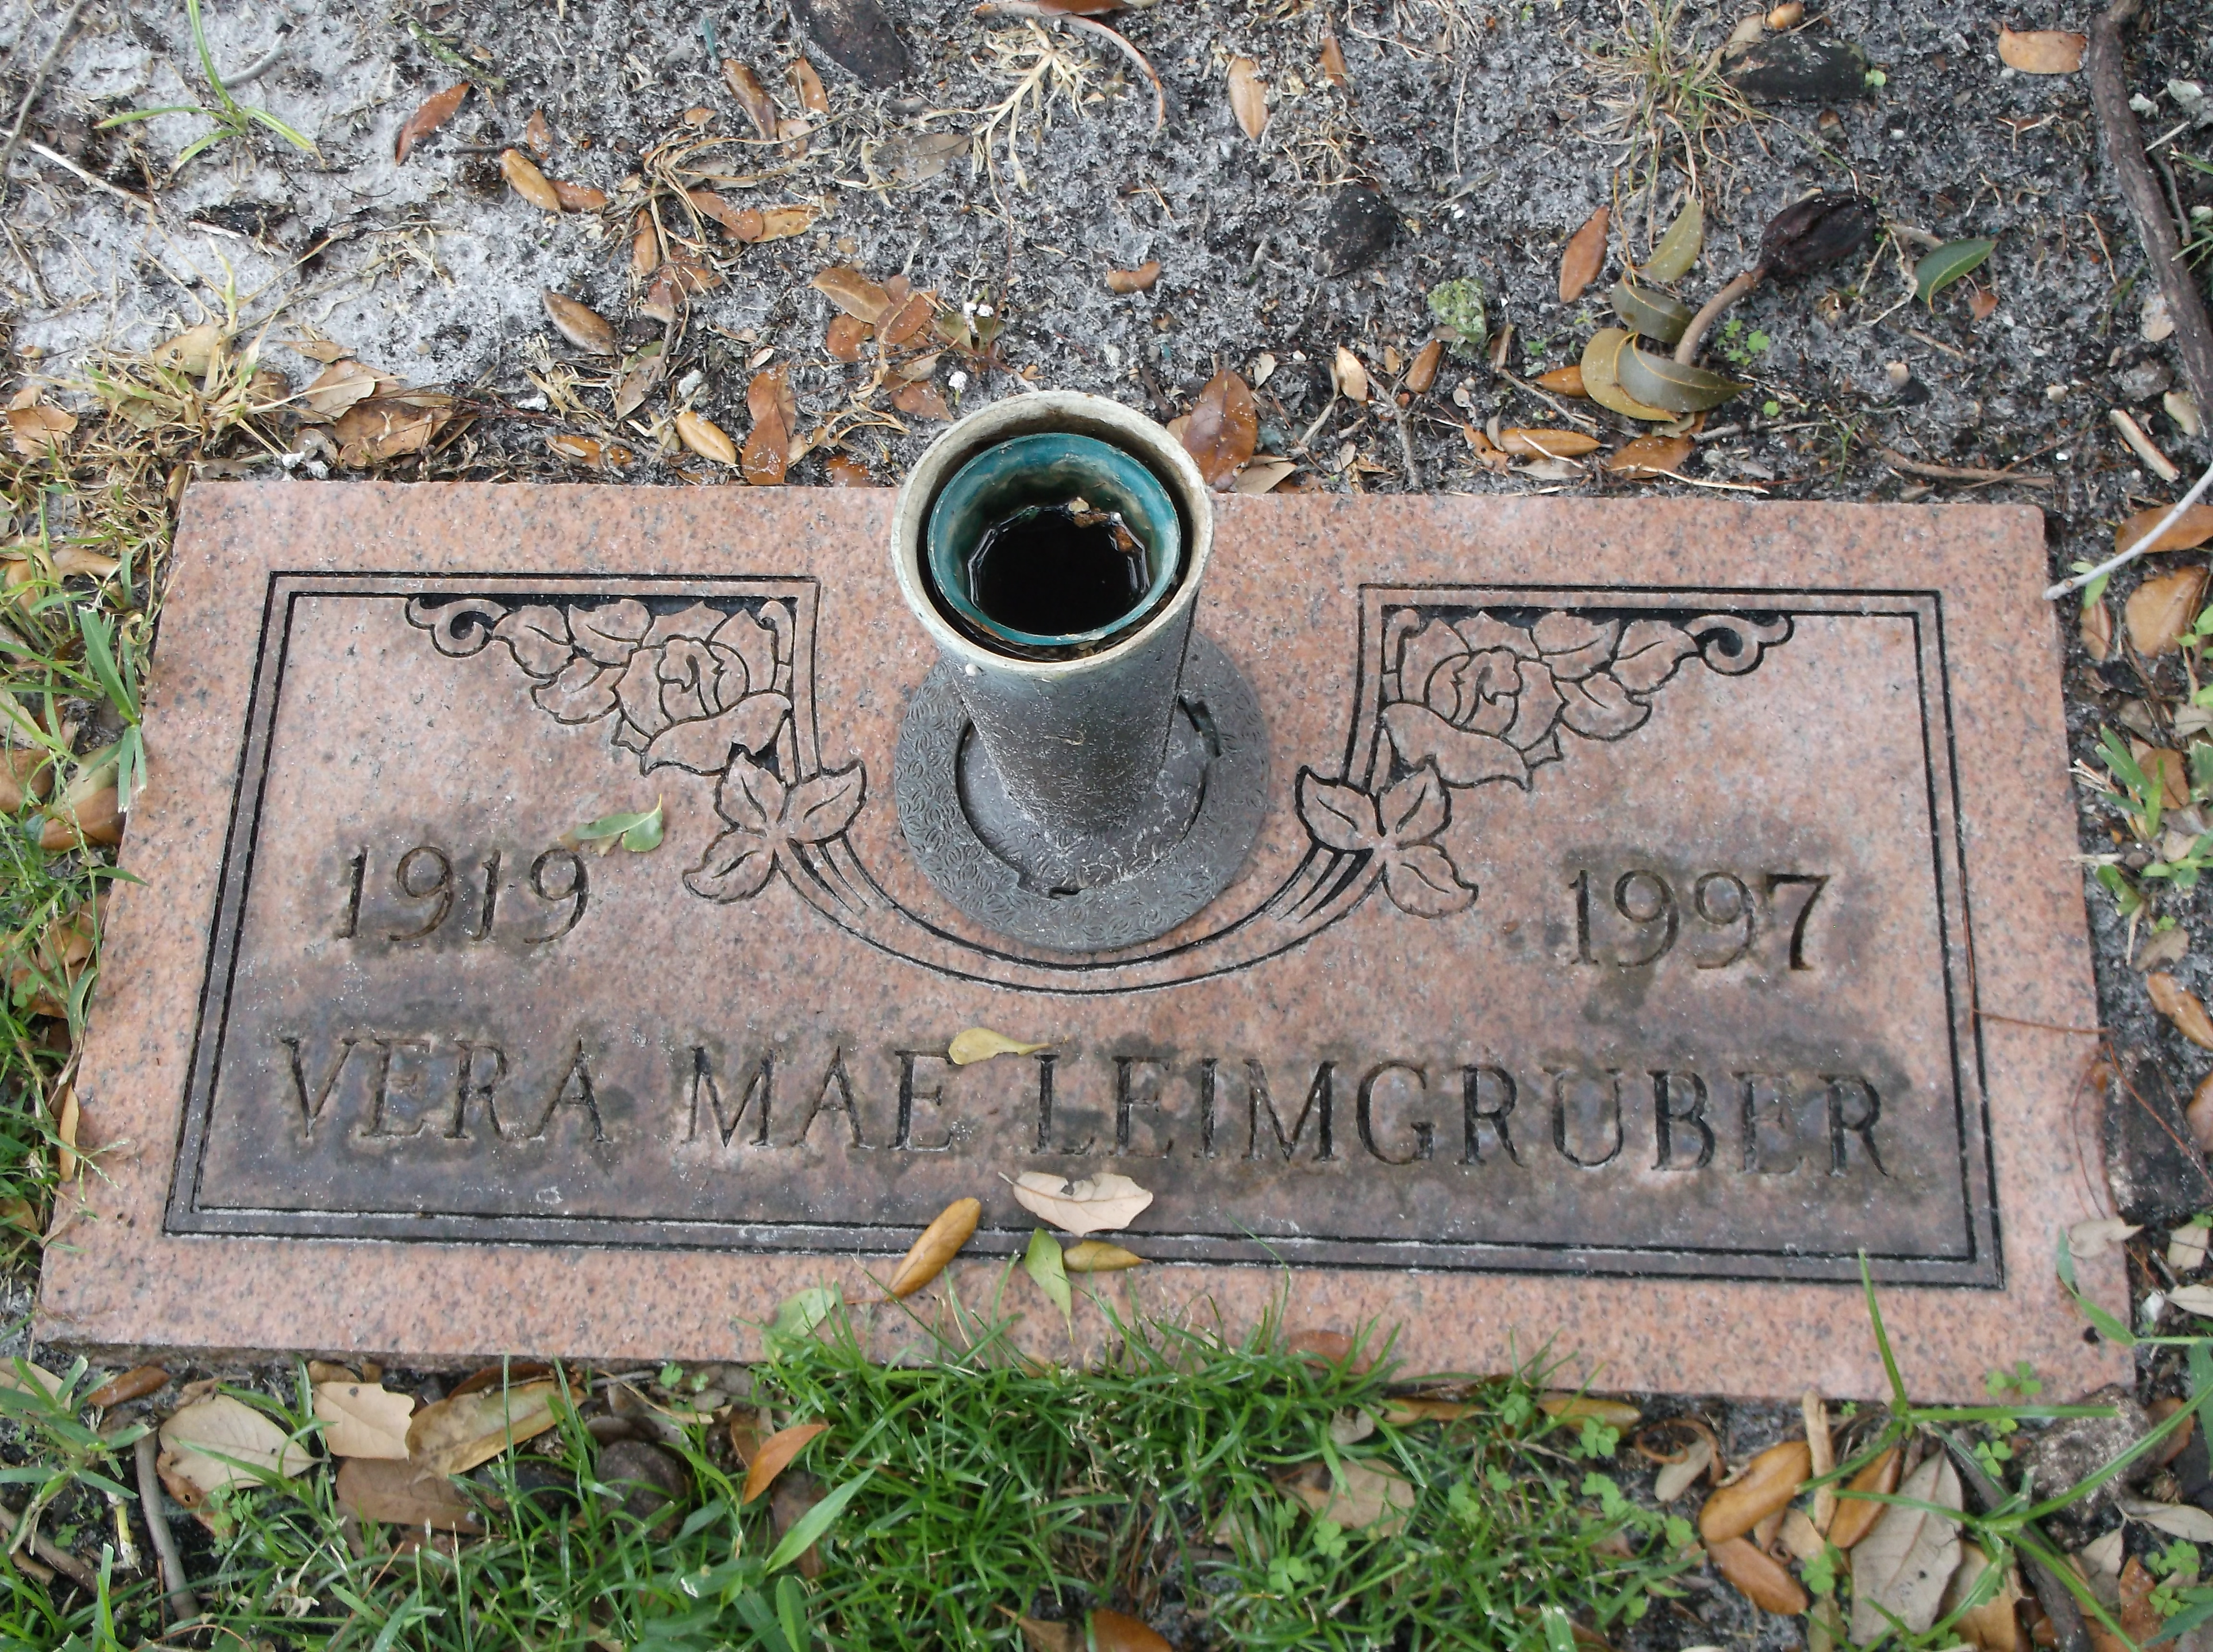 Vera Mae Leimgruber